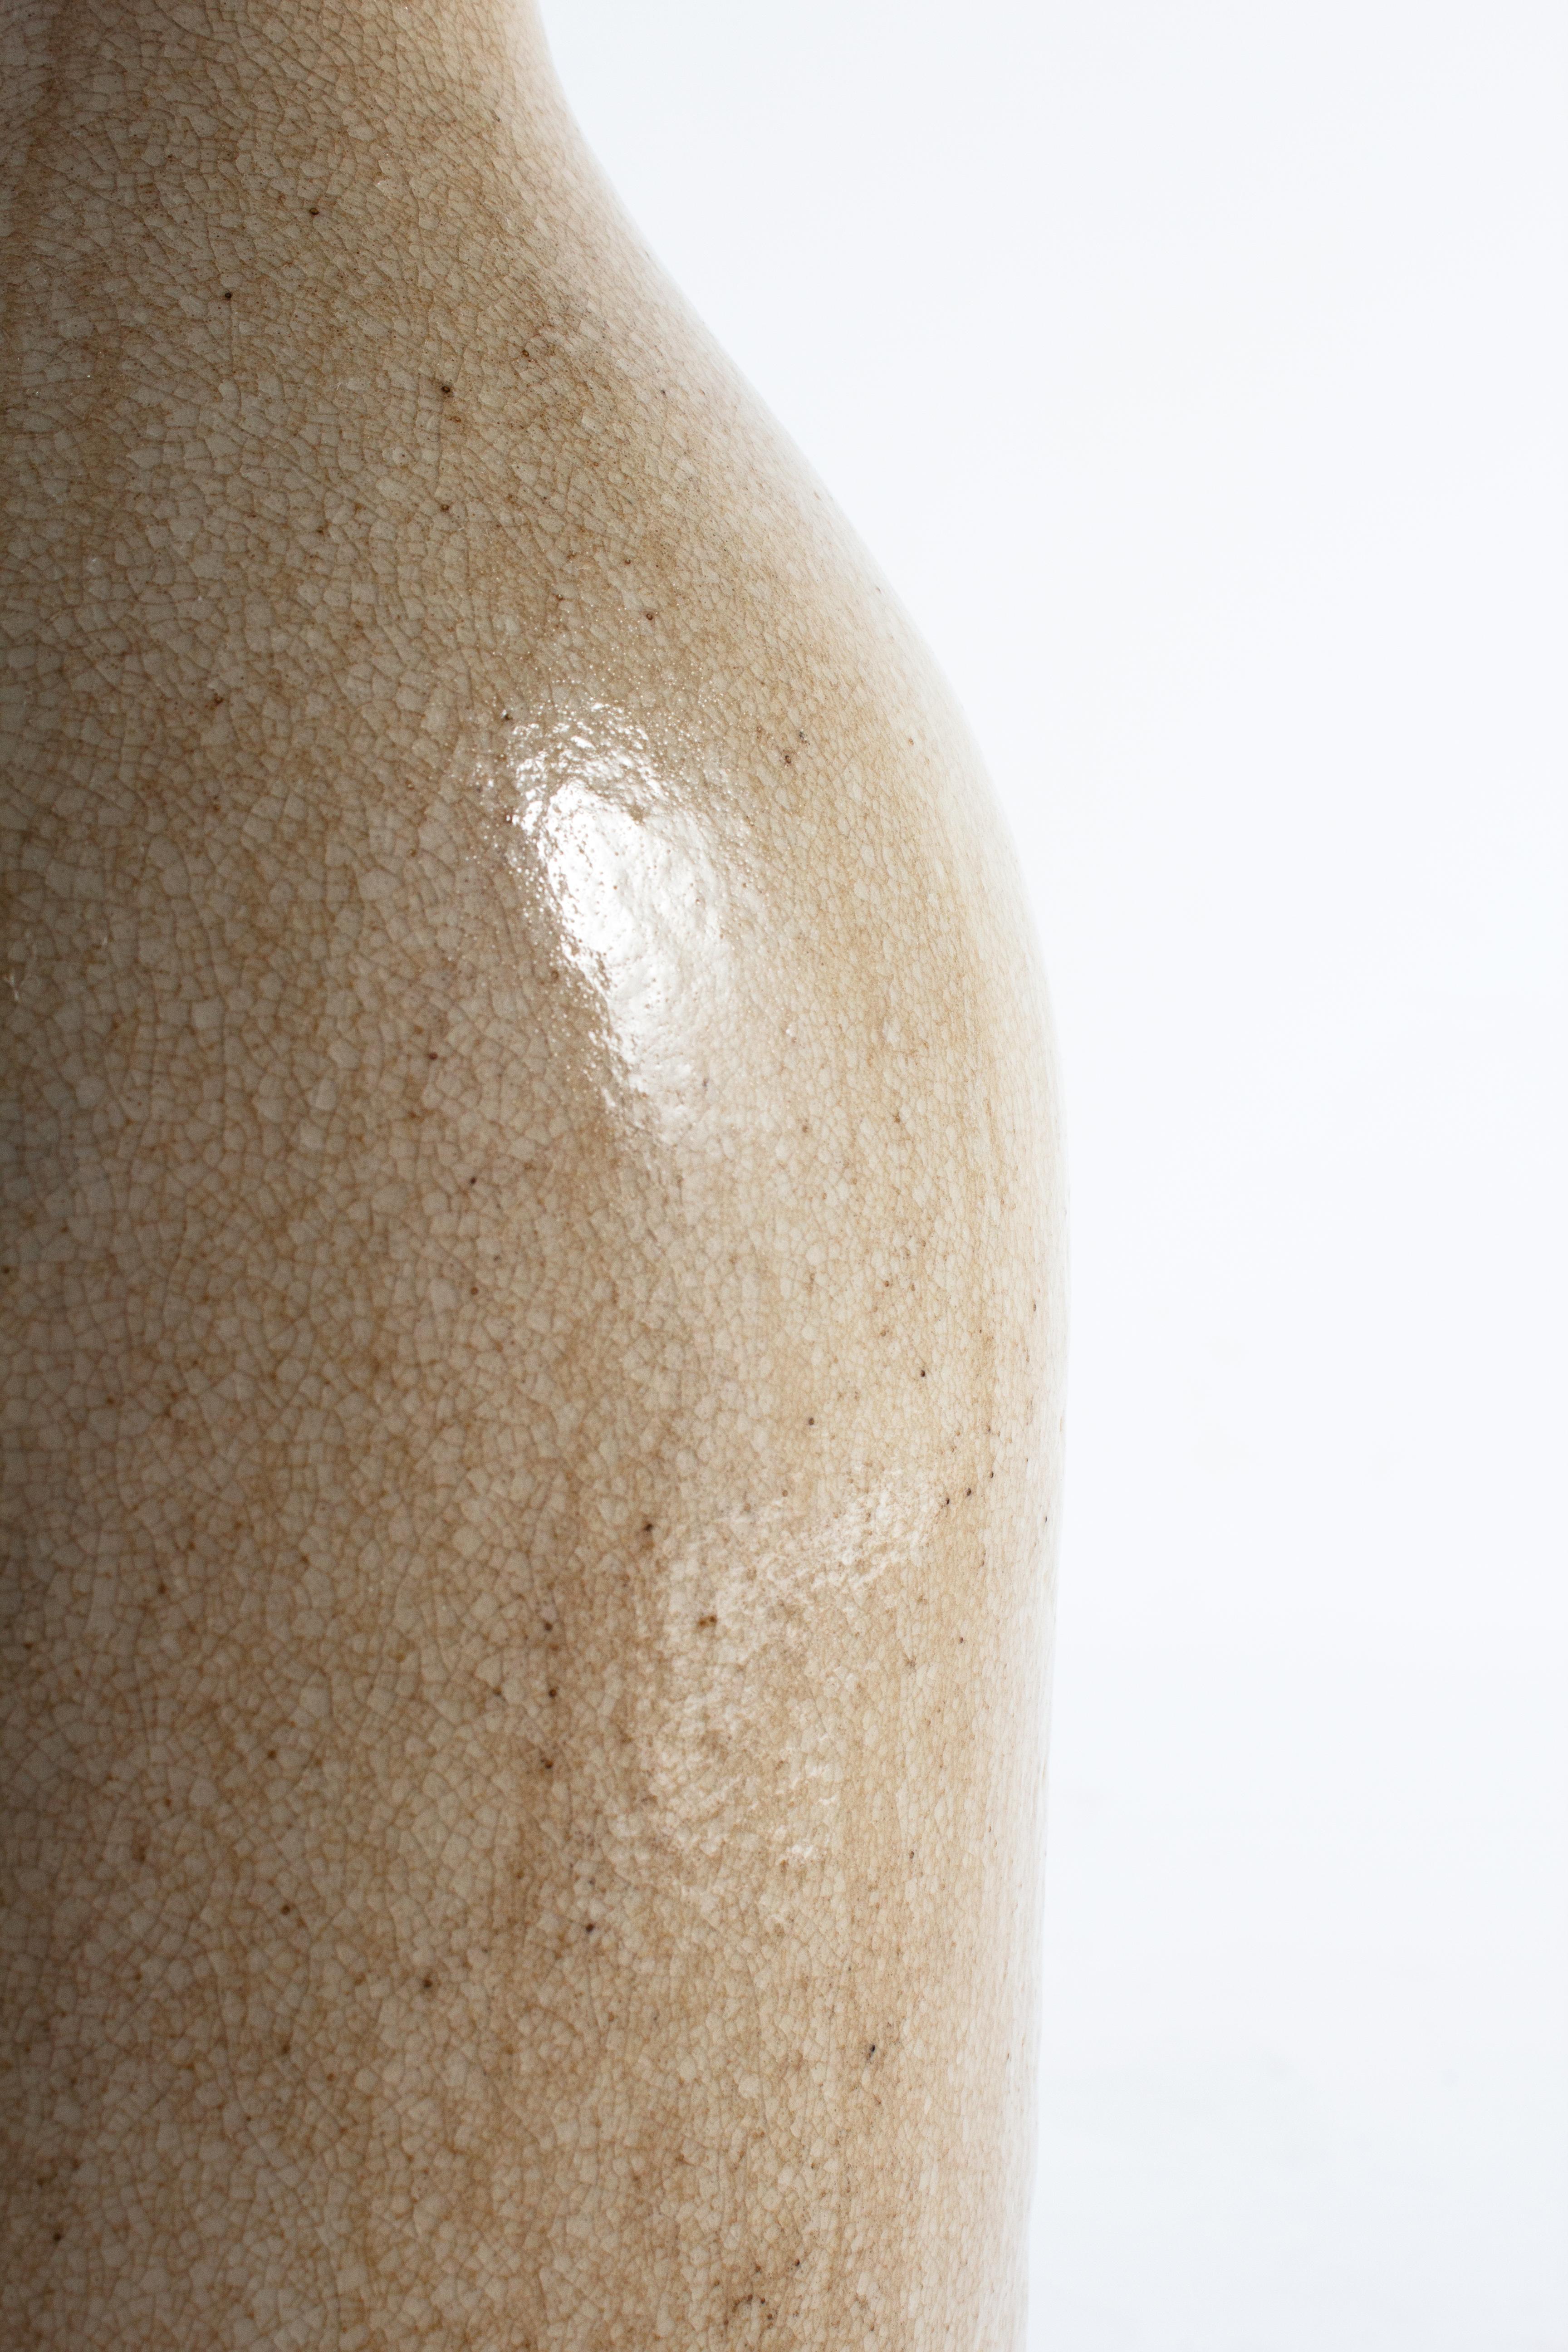 20th Century Crackled Ceramic Raku Bottle